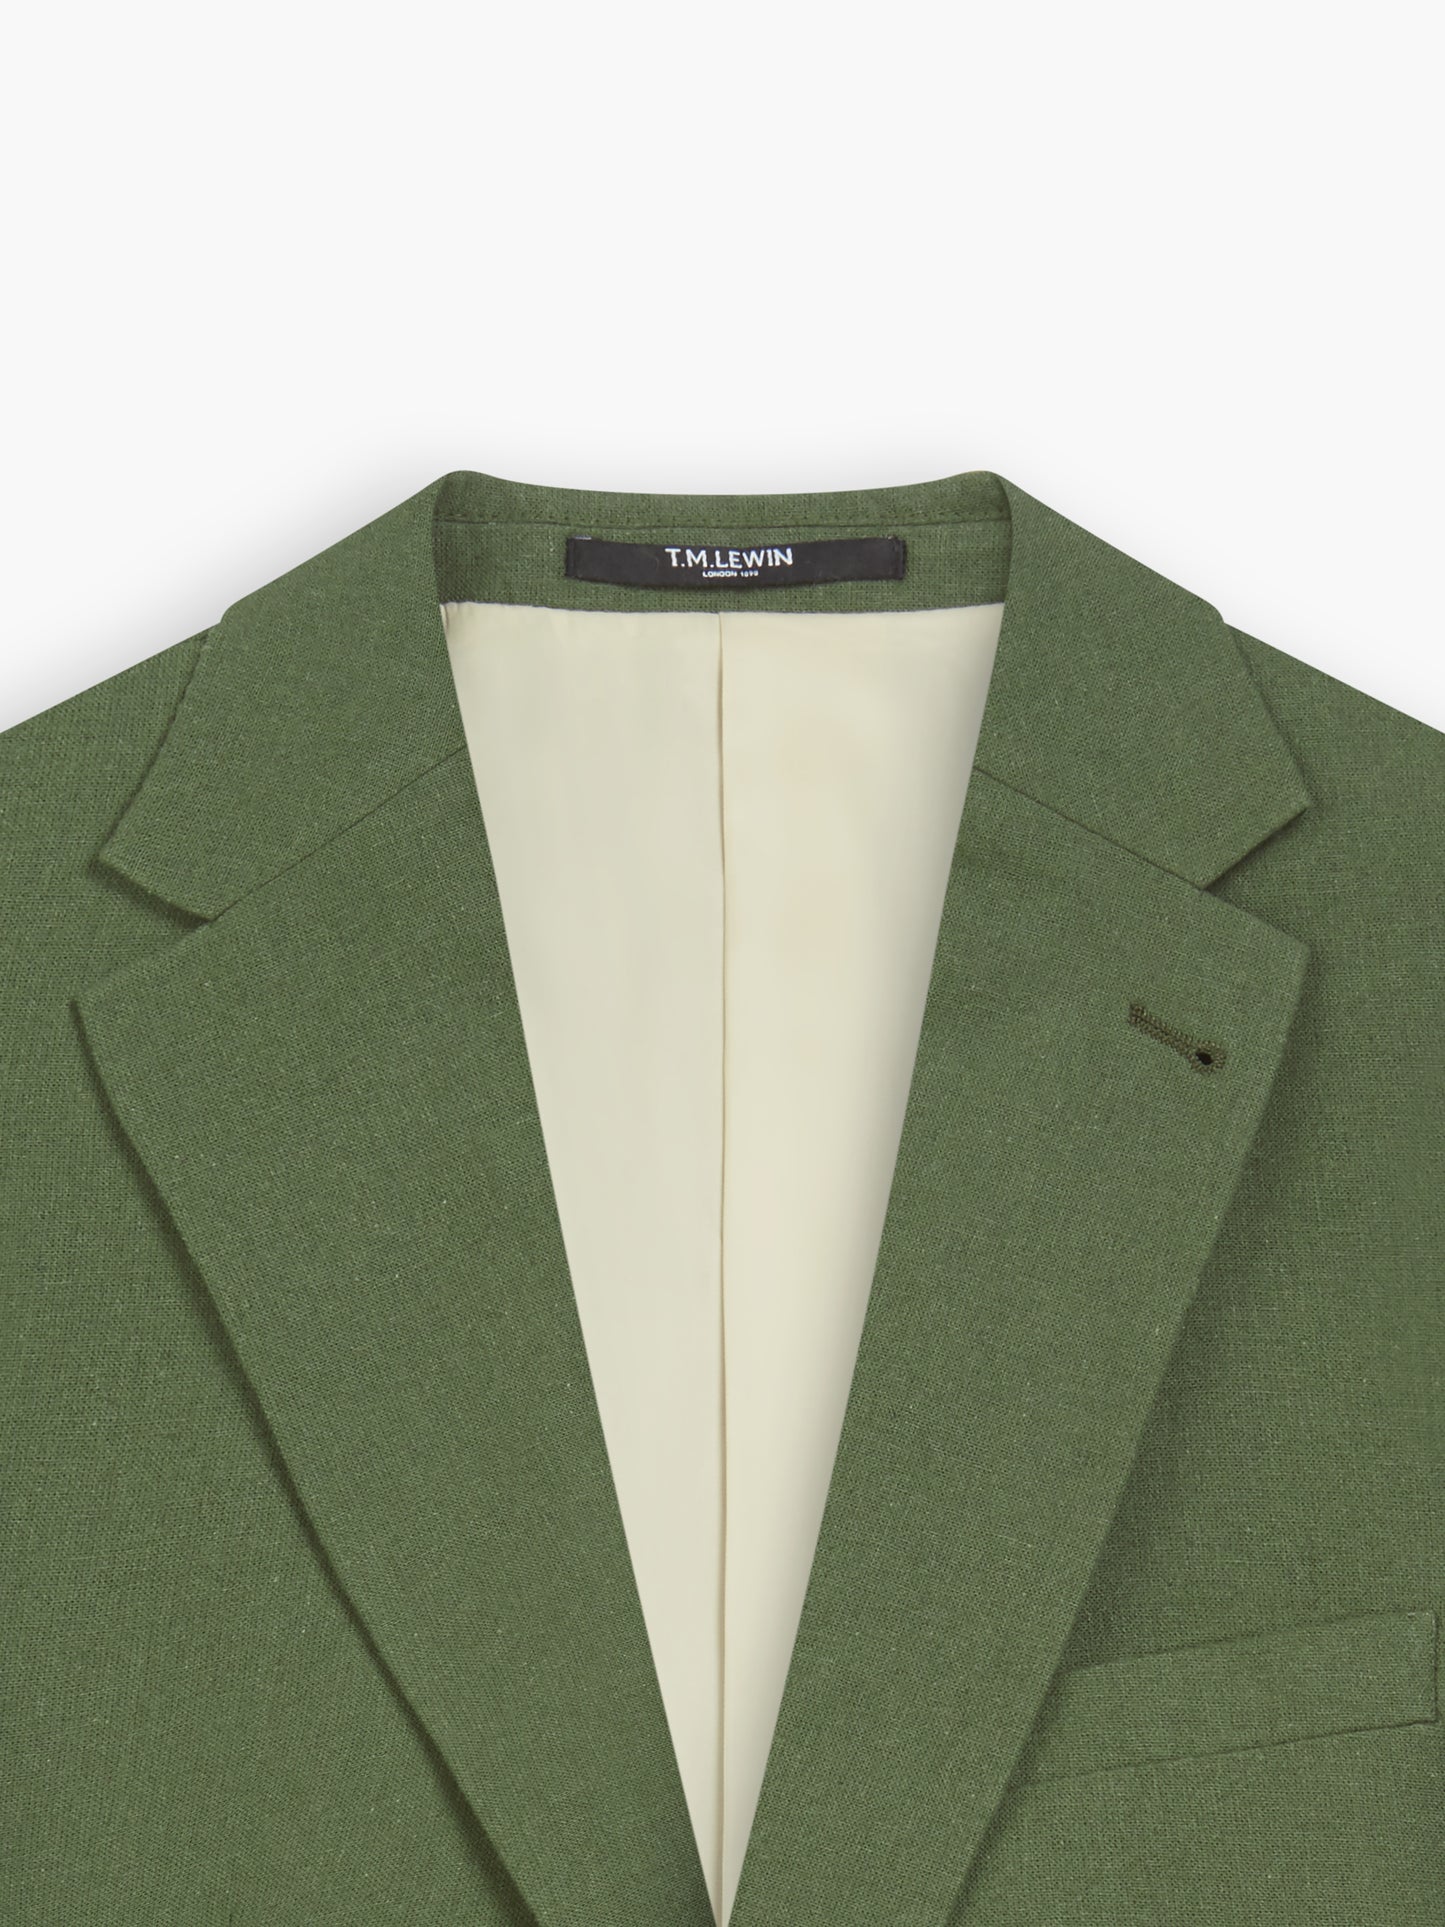 Piccadilly Linen Slim Dark Green Suit Jacket